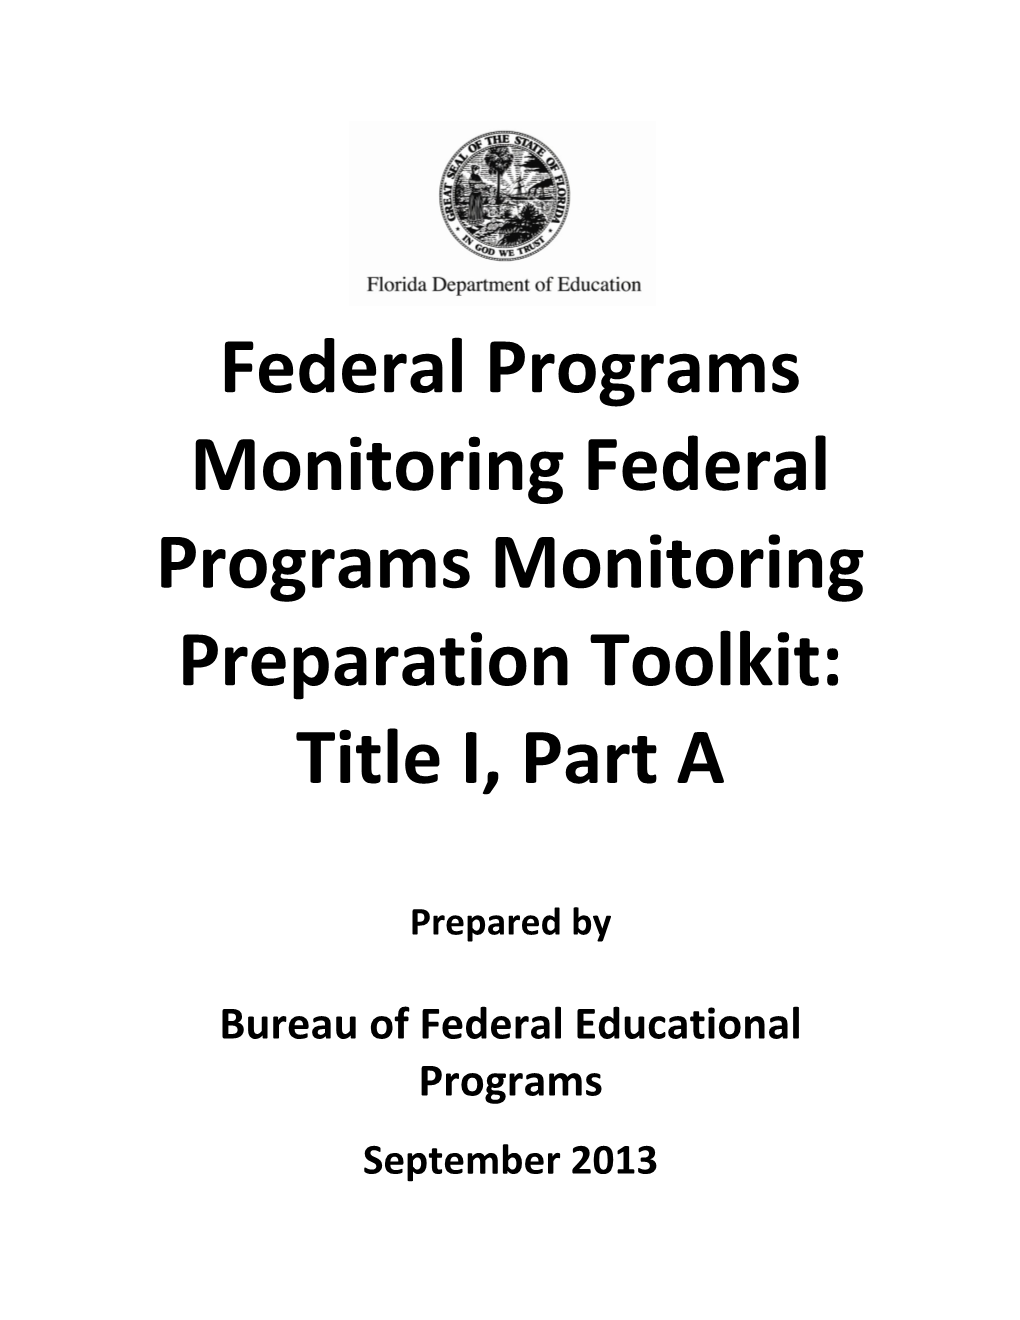 Bureau of Federal Educational Programs